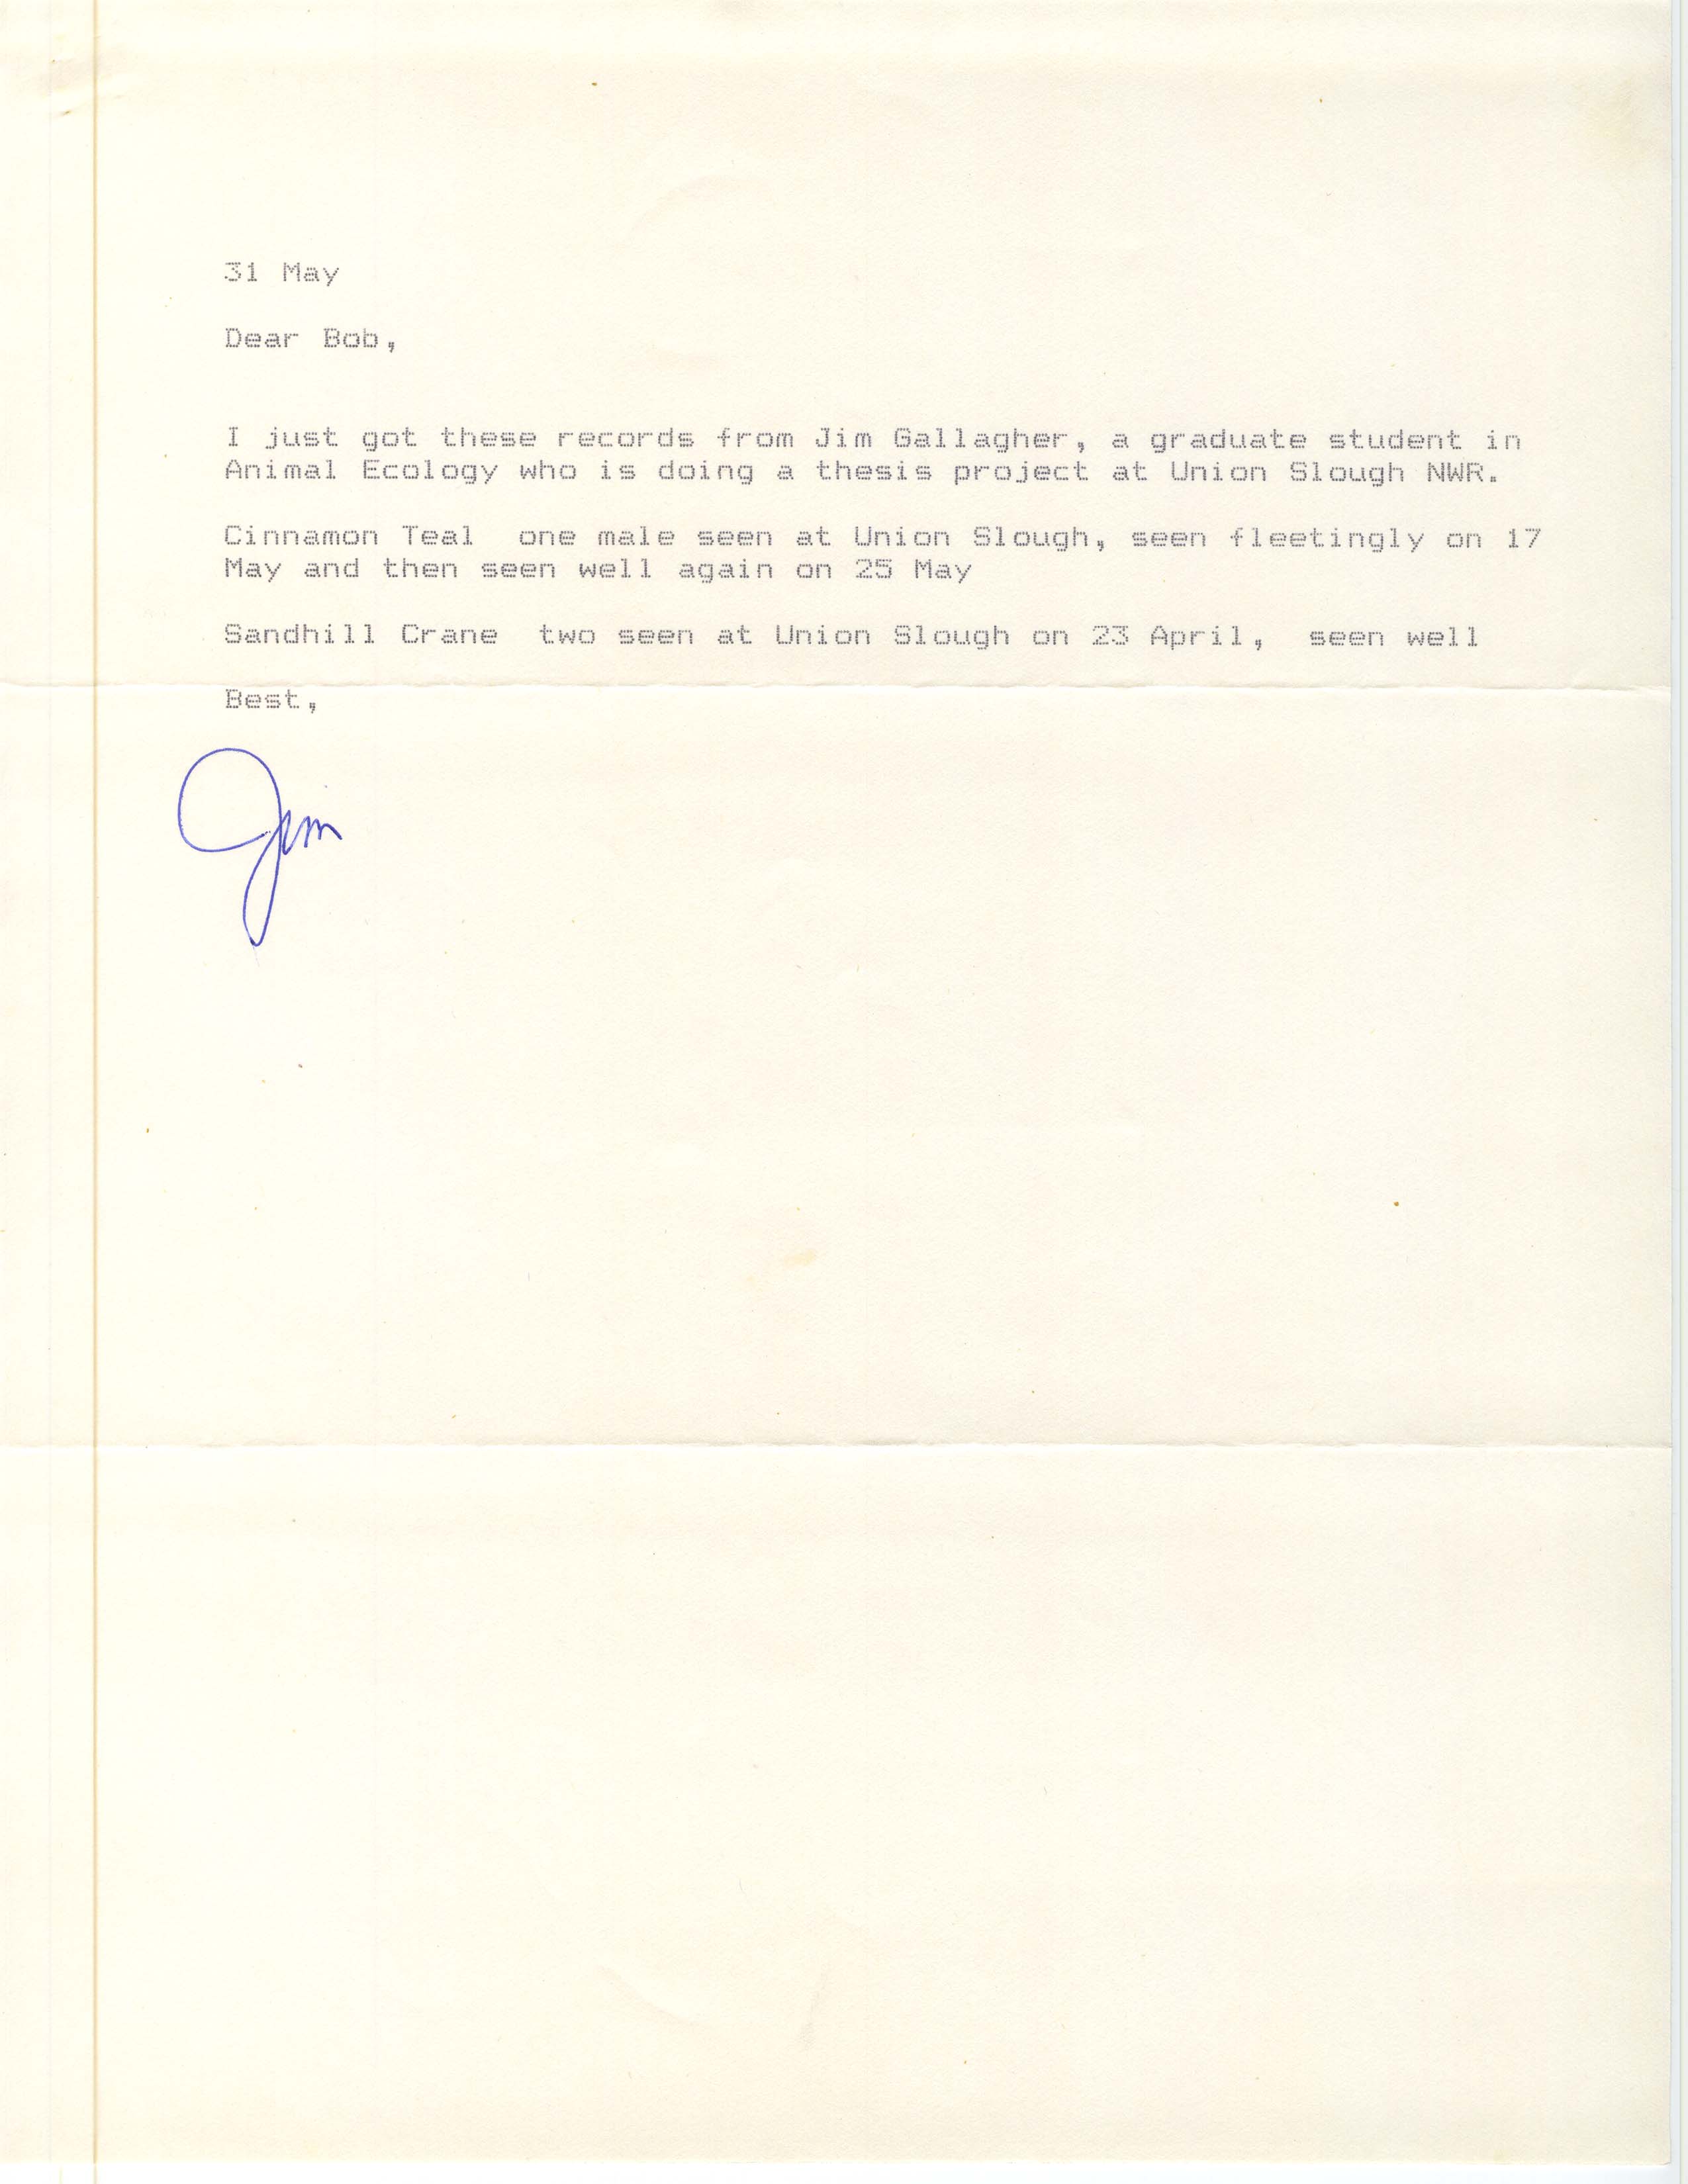 James J. Dinsmore letter to Robert K. Meyers regarding bird sightings, May 31, 1988